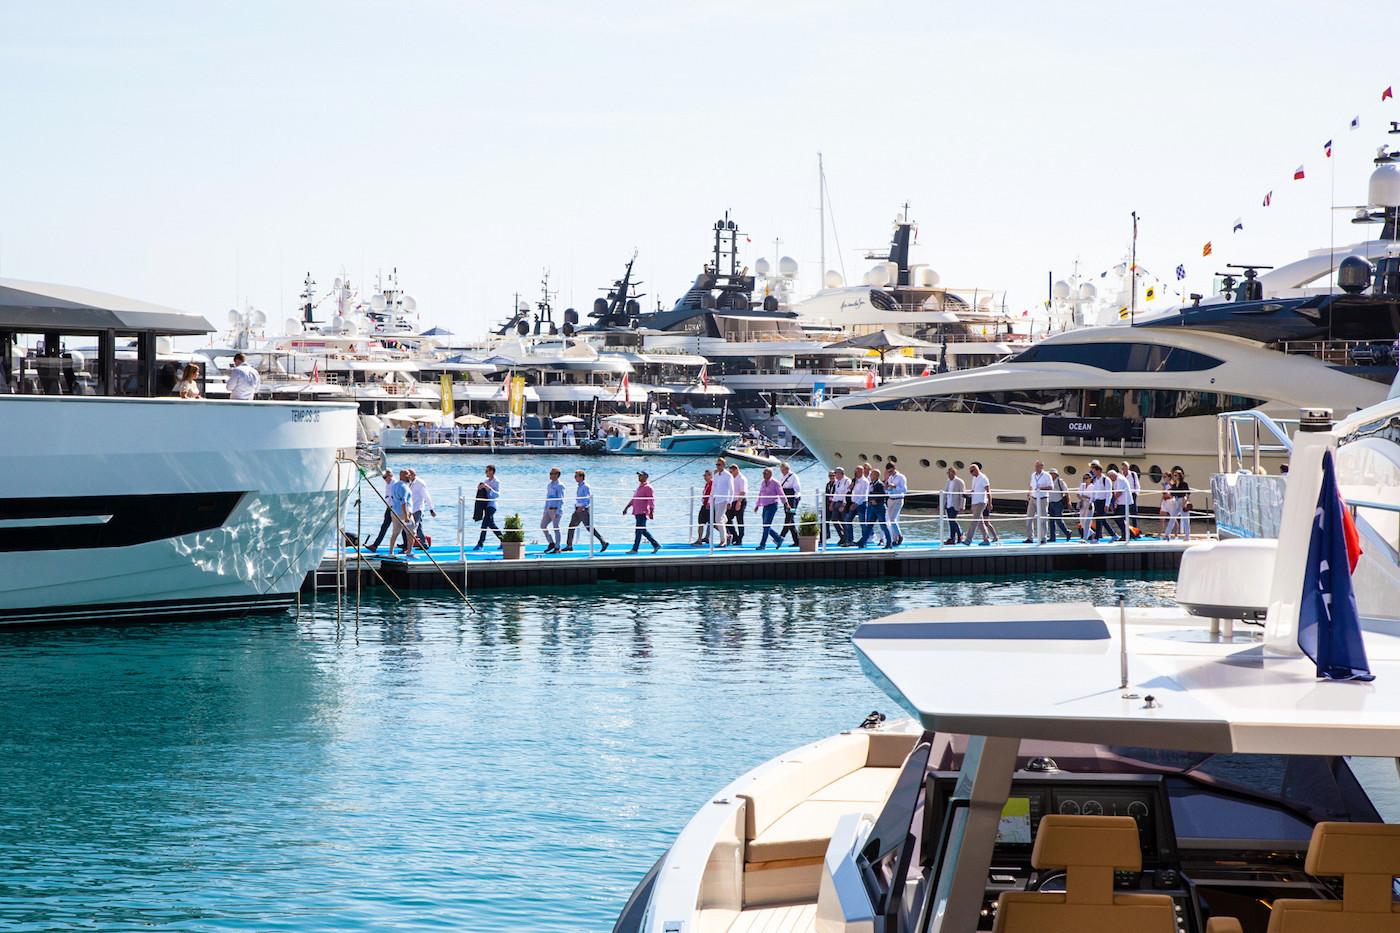 Photo © Monaco Yacht Show.